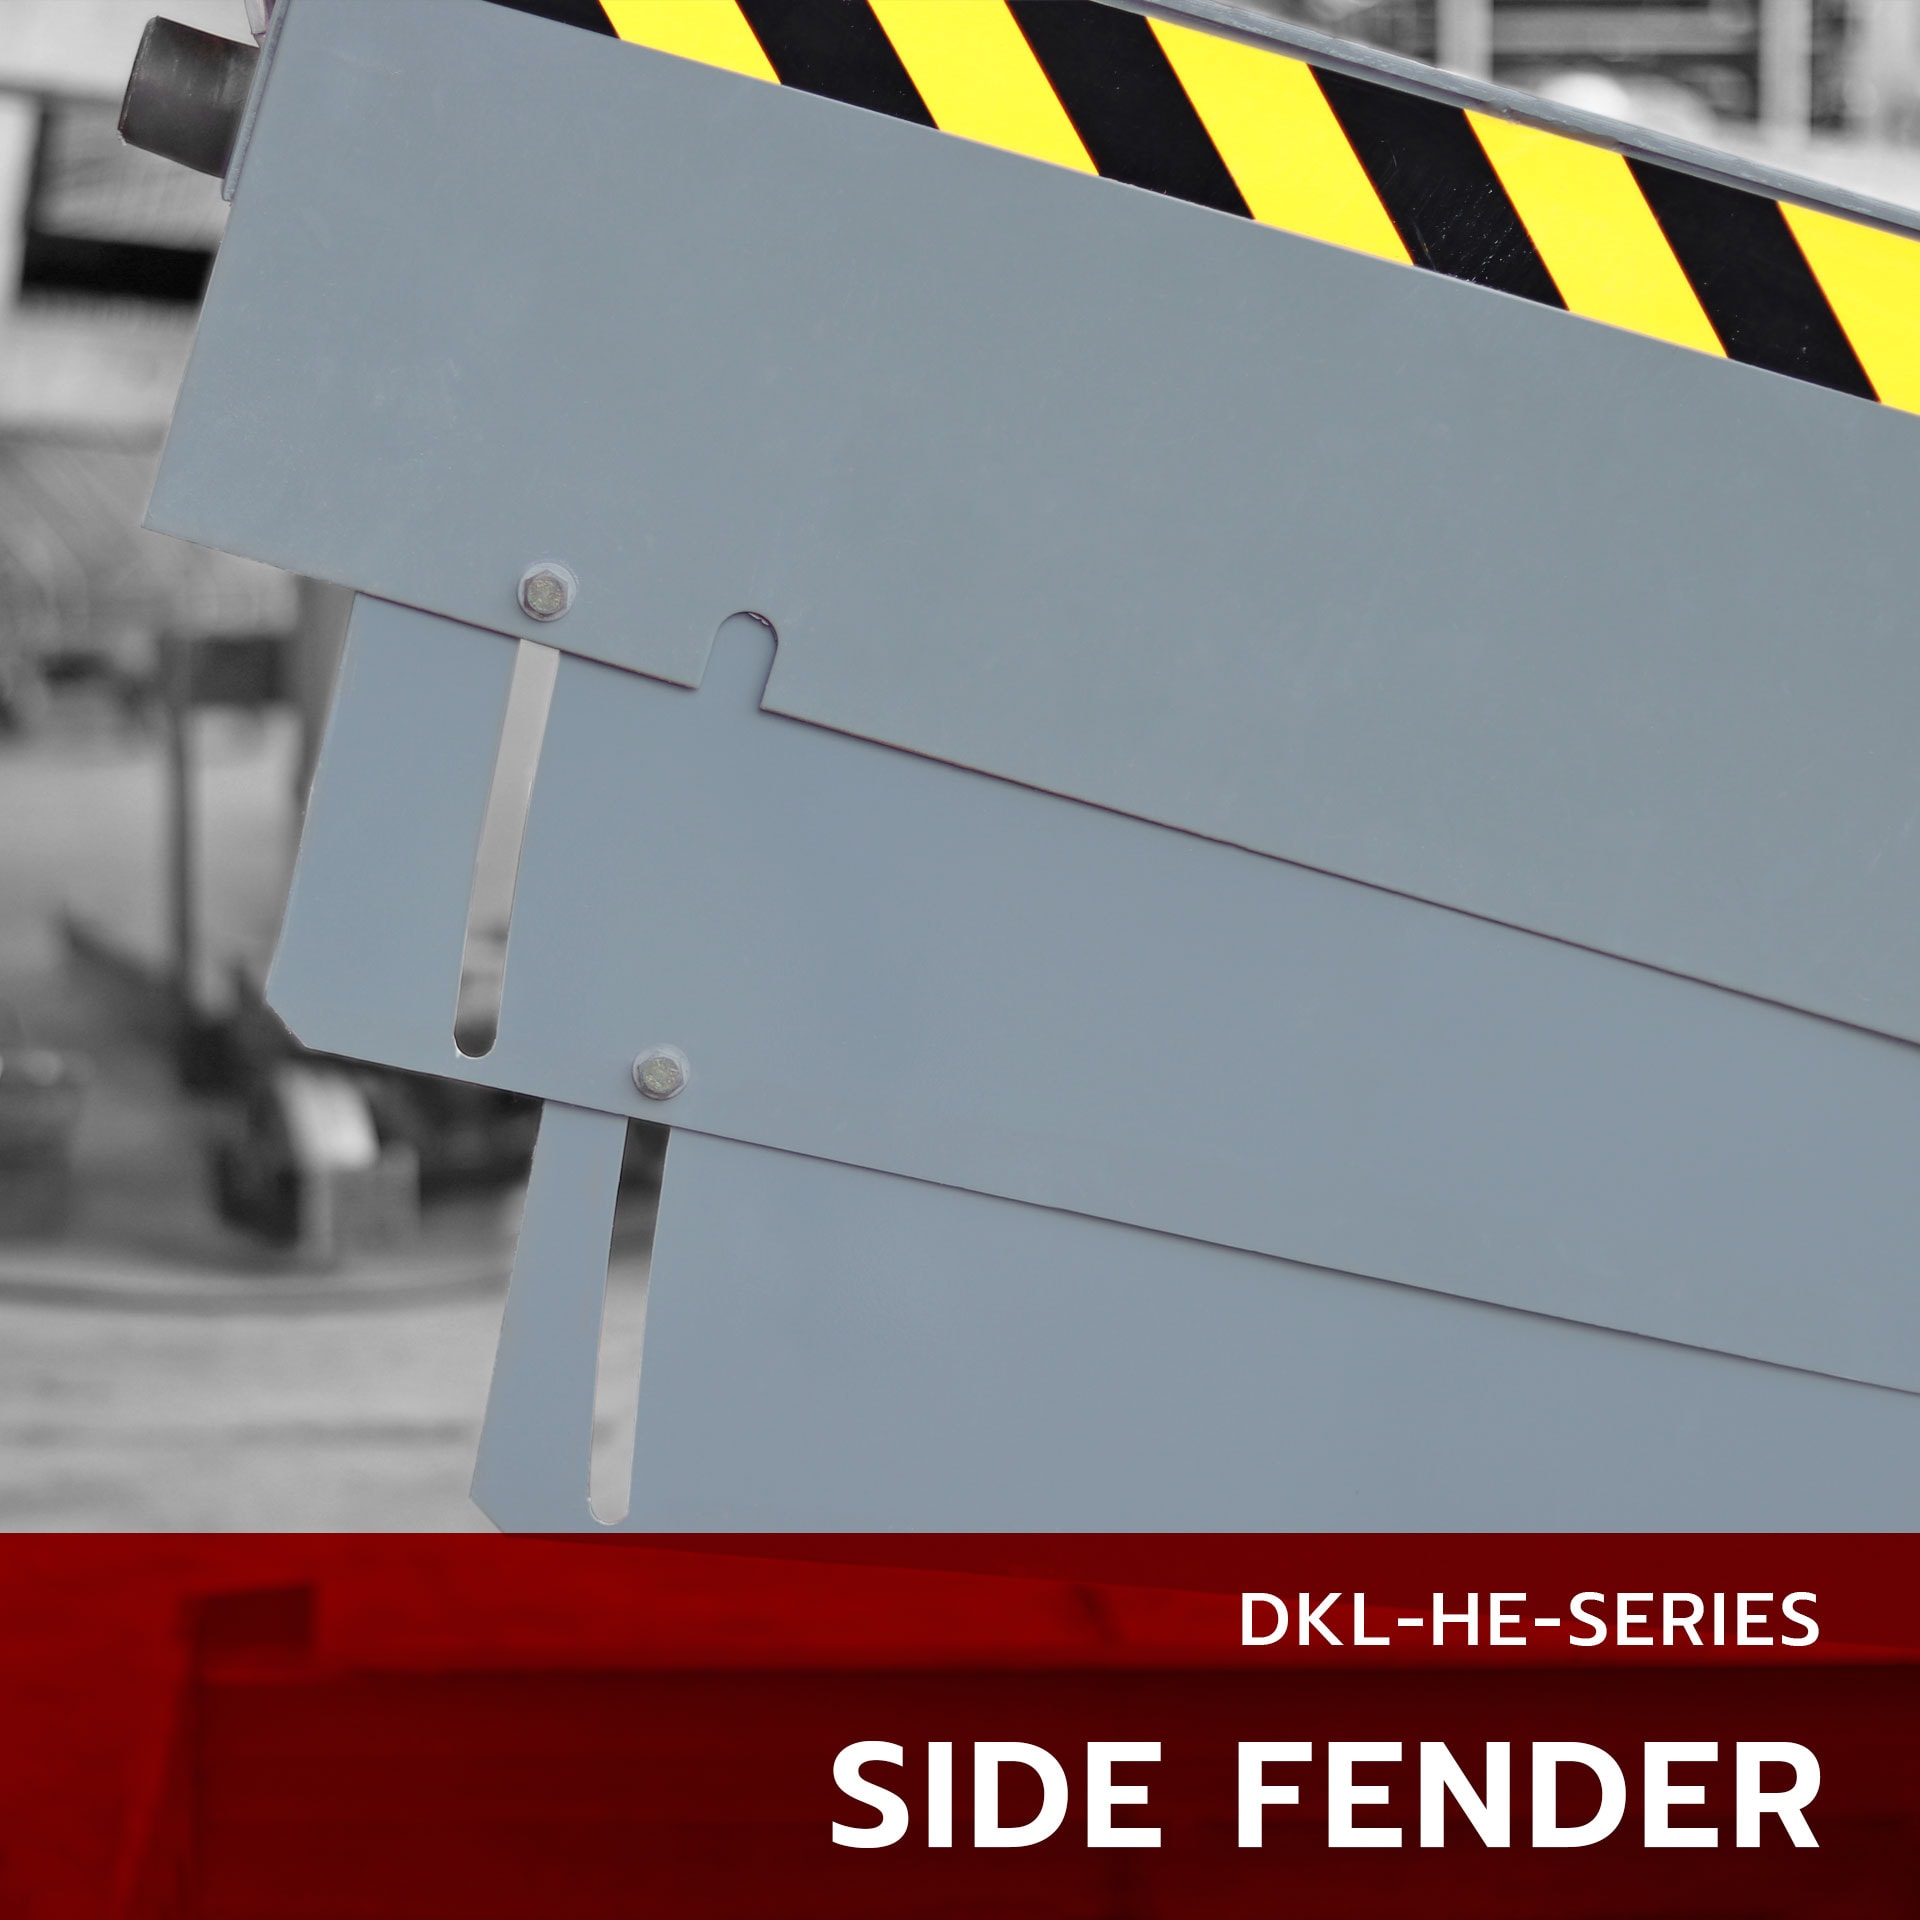 Side fender สะพานปรับระดับ โหลดสินค้า รุ่น dkl-he-series